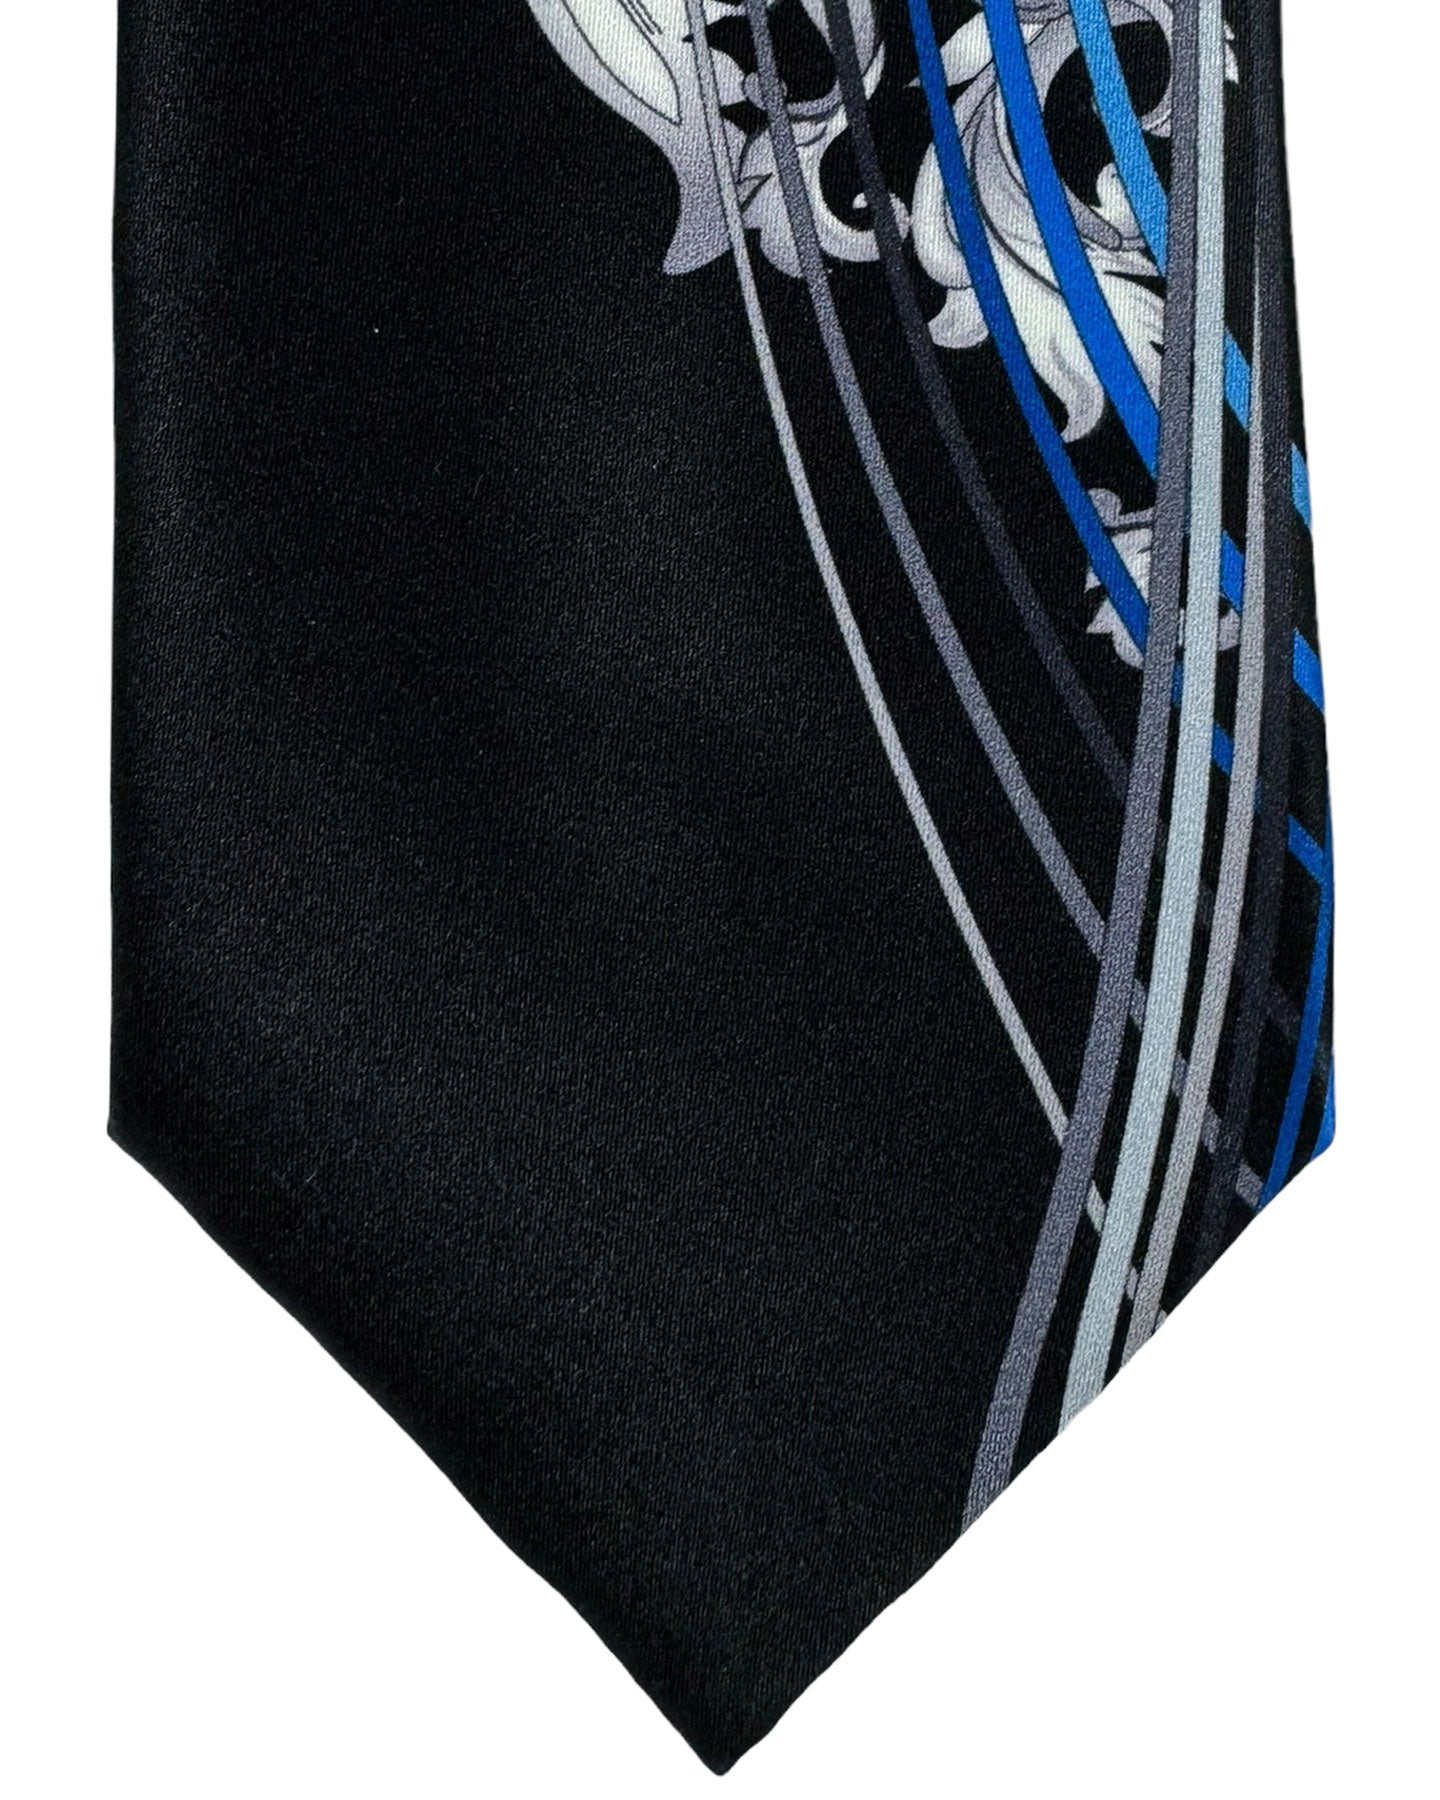 Vitaliano Pancaldi Silk Tie Black Blue Ornamental Swirl Design